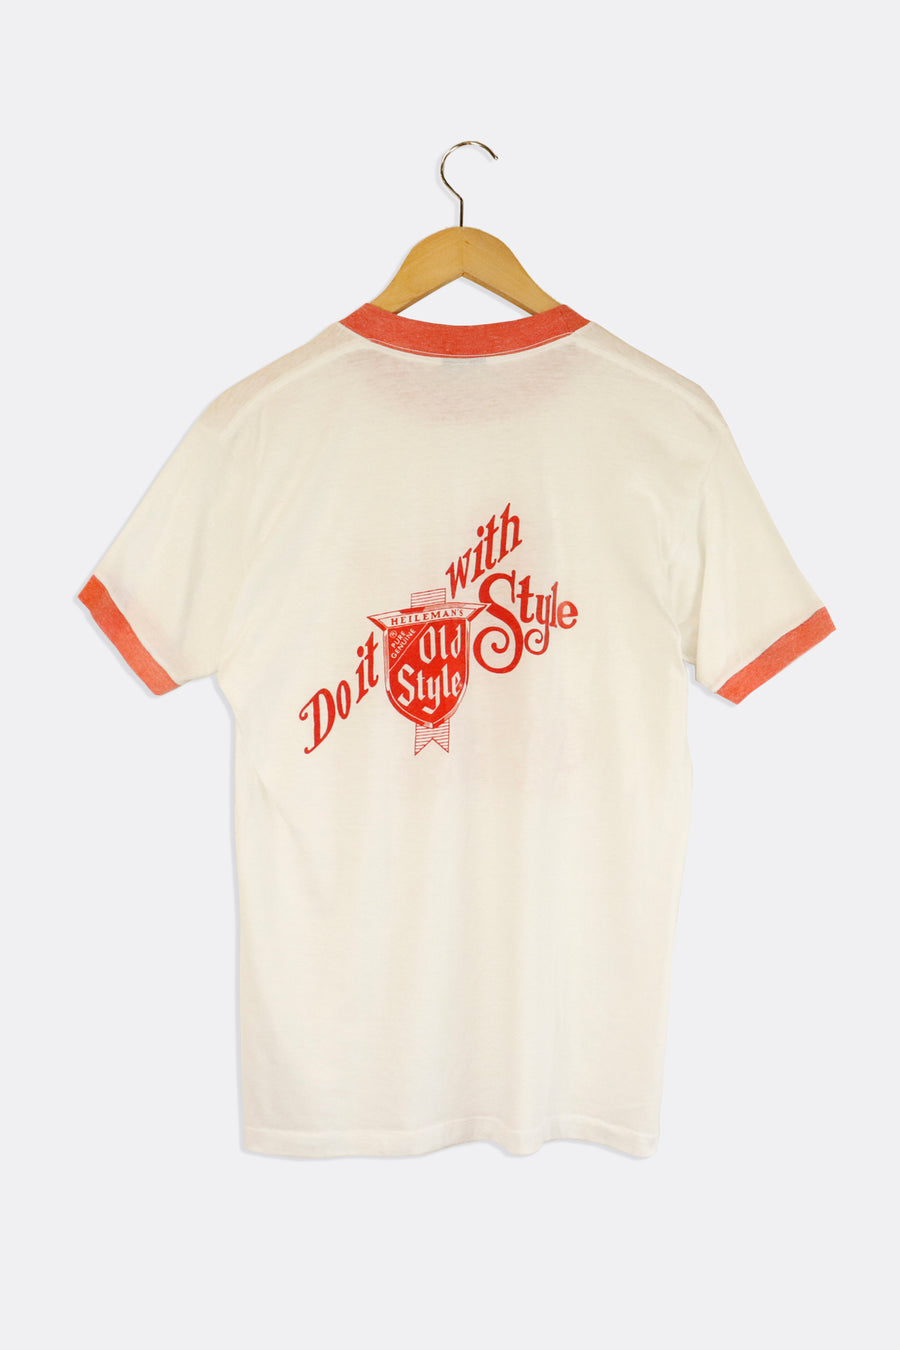 Vintage Heilemans Old Style Softball Marathon Easter Seals T Shirt Sz L